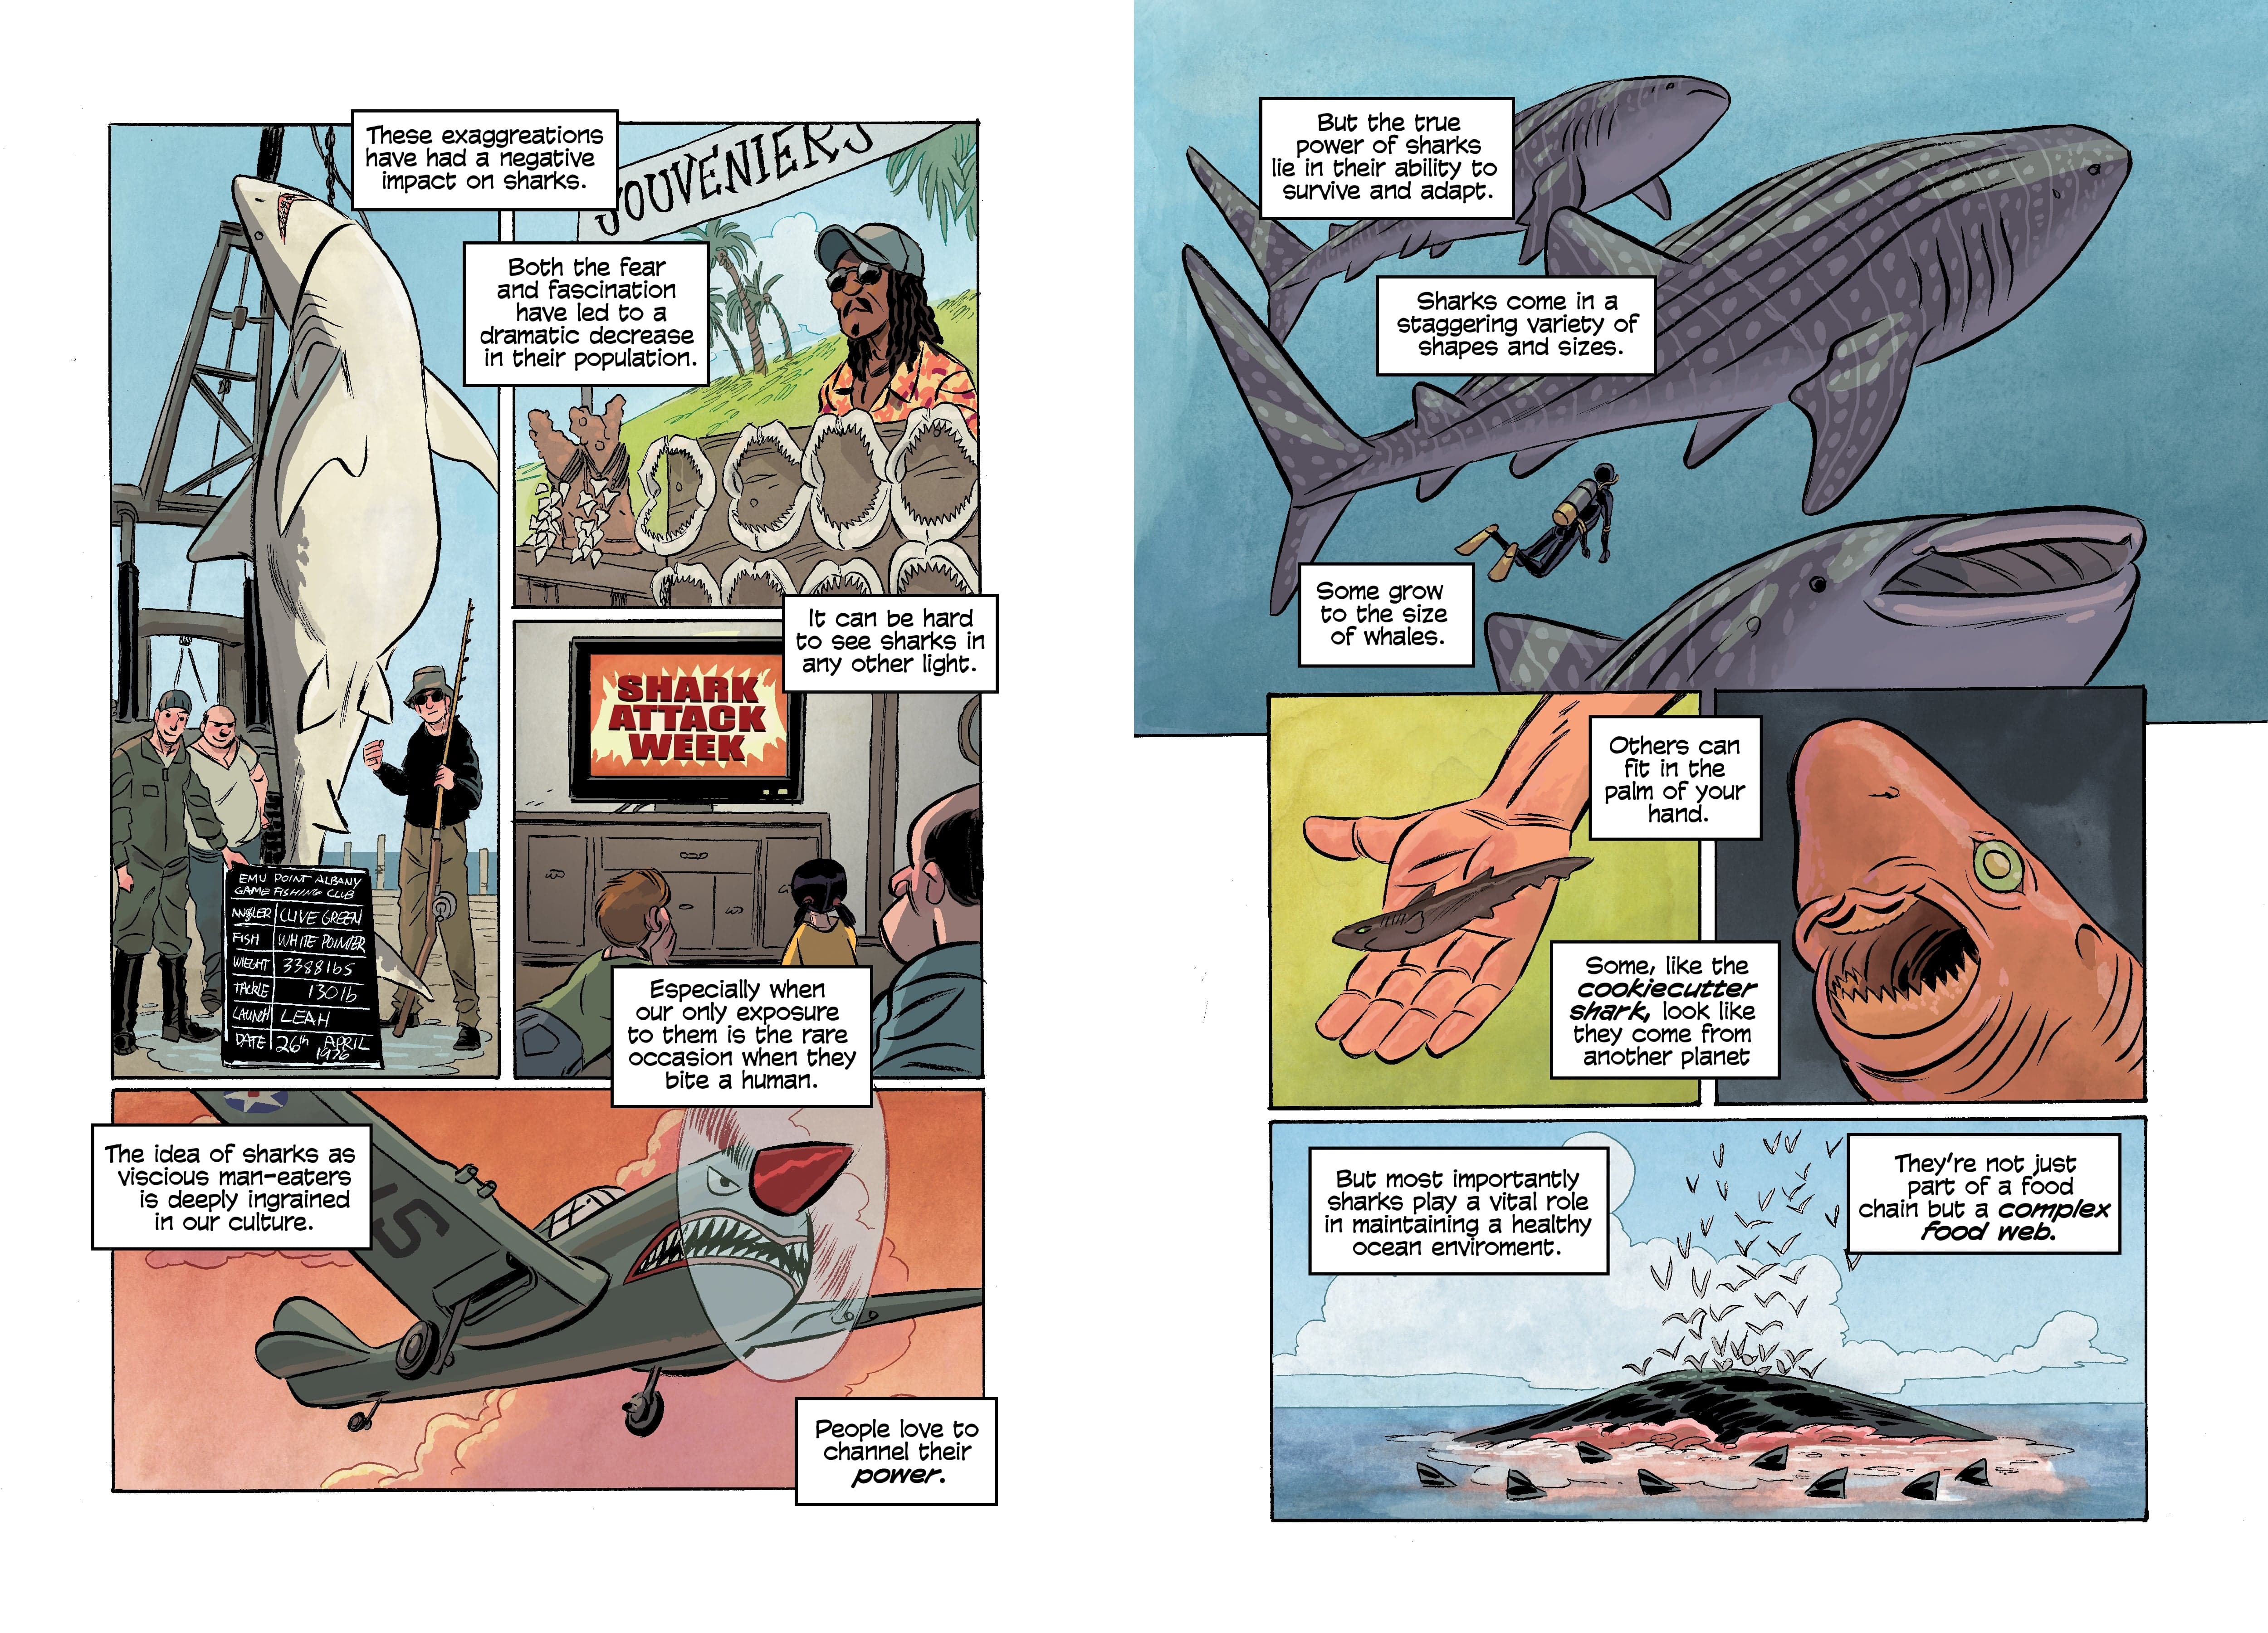 Science Comics - Sharks Nature's Perfect Hunter